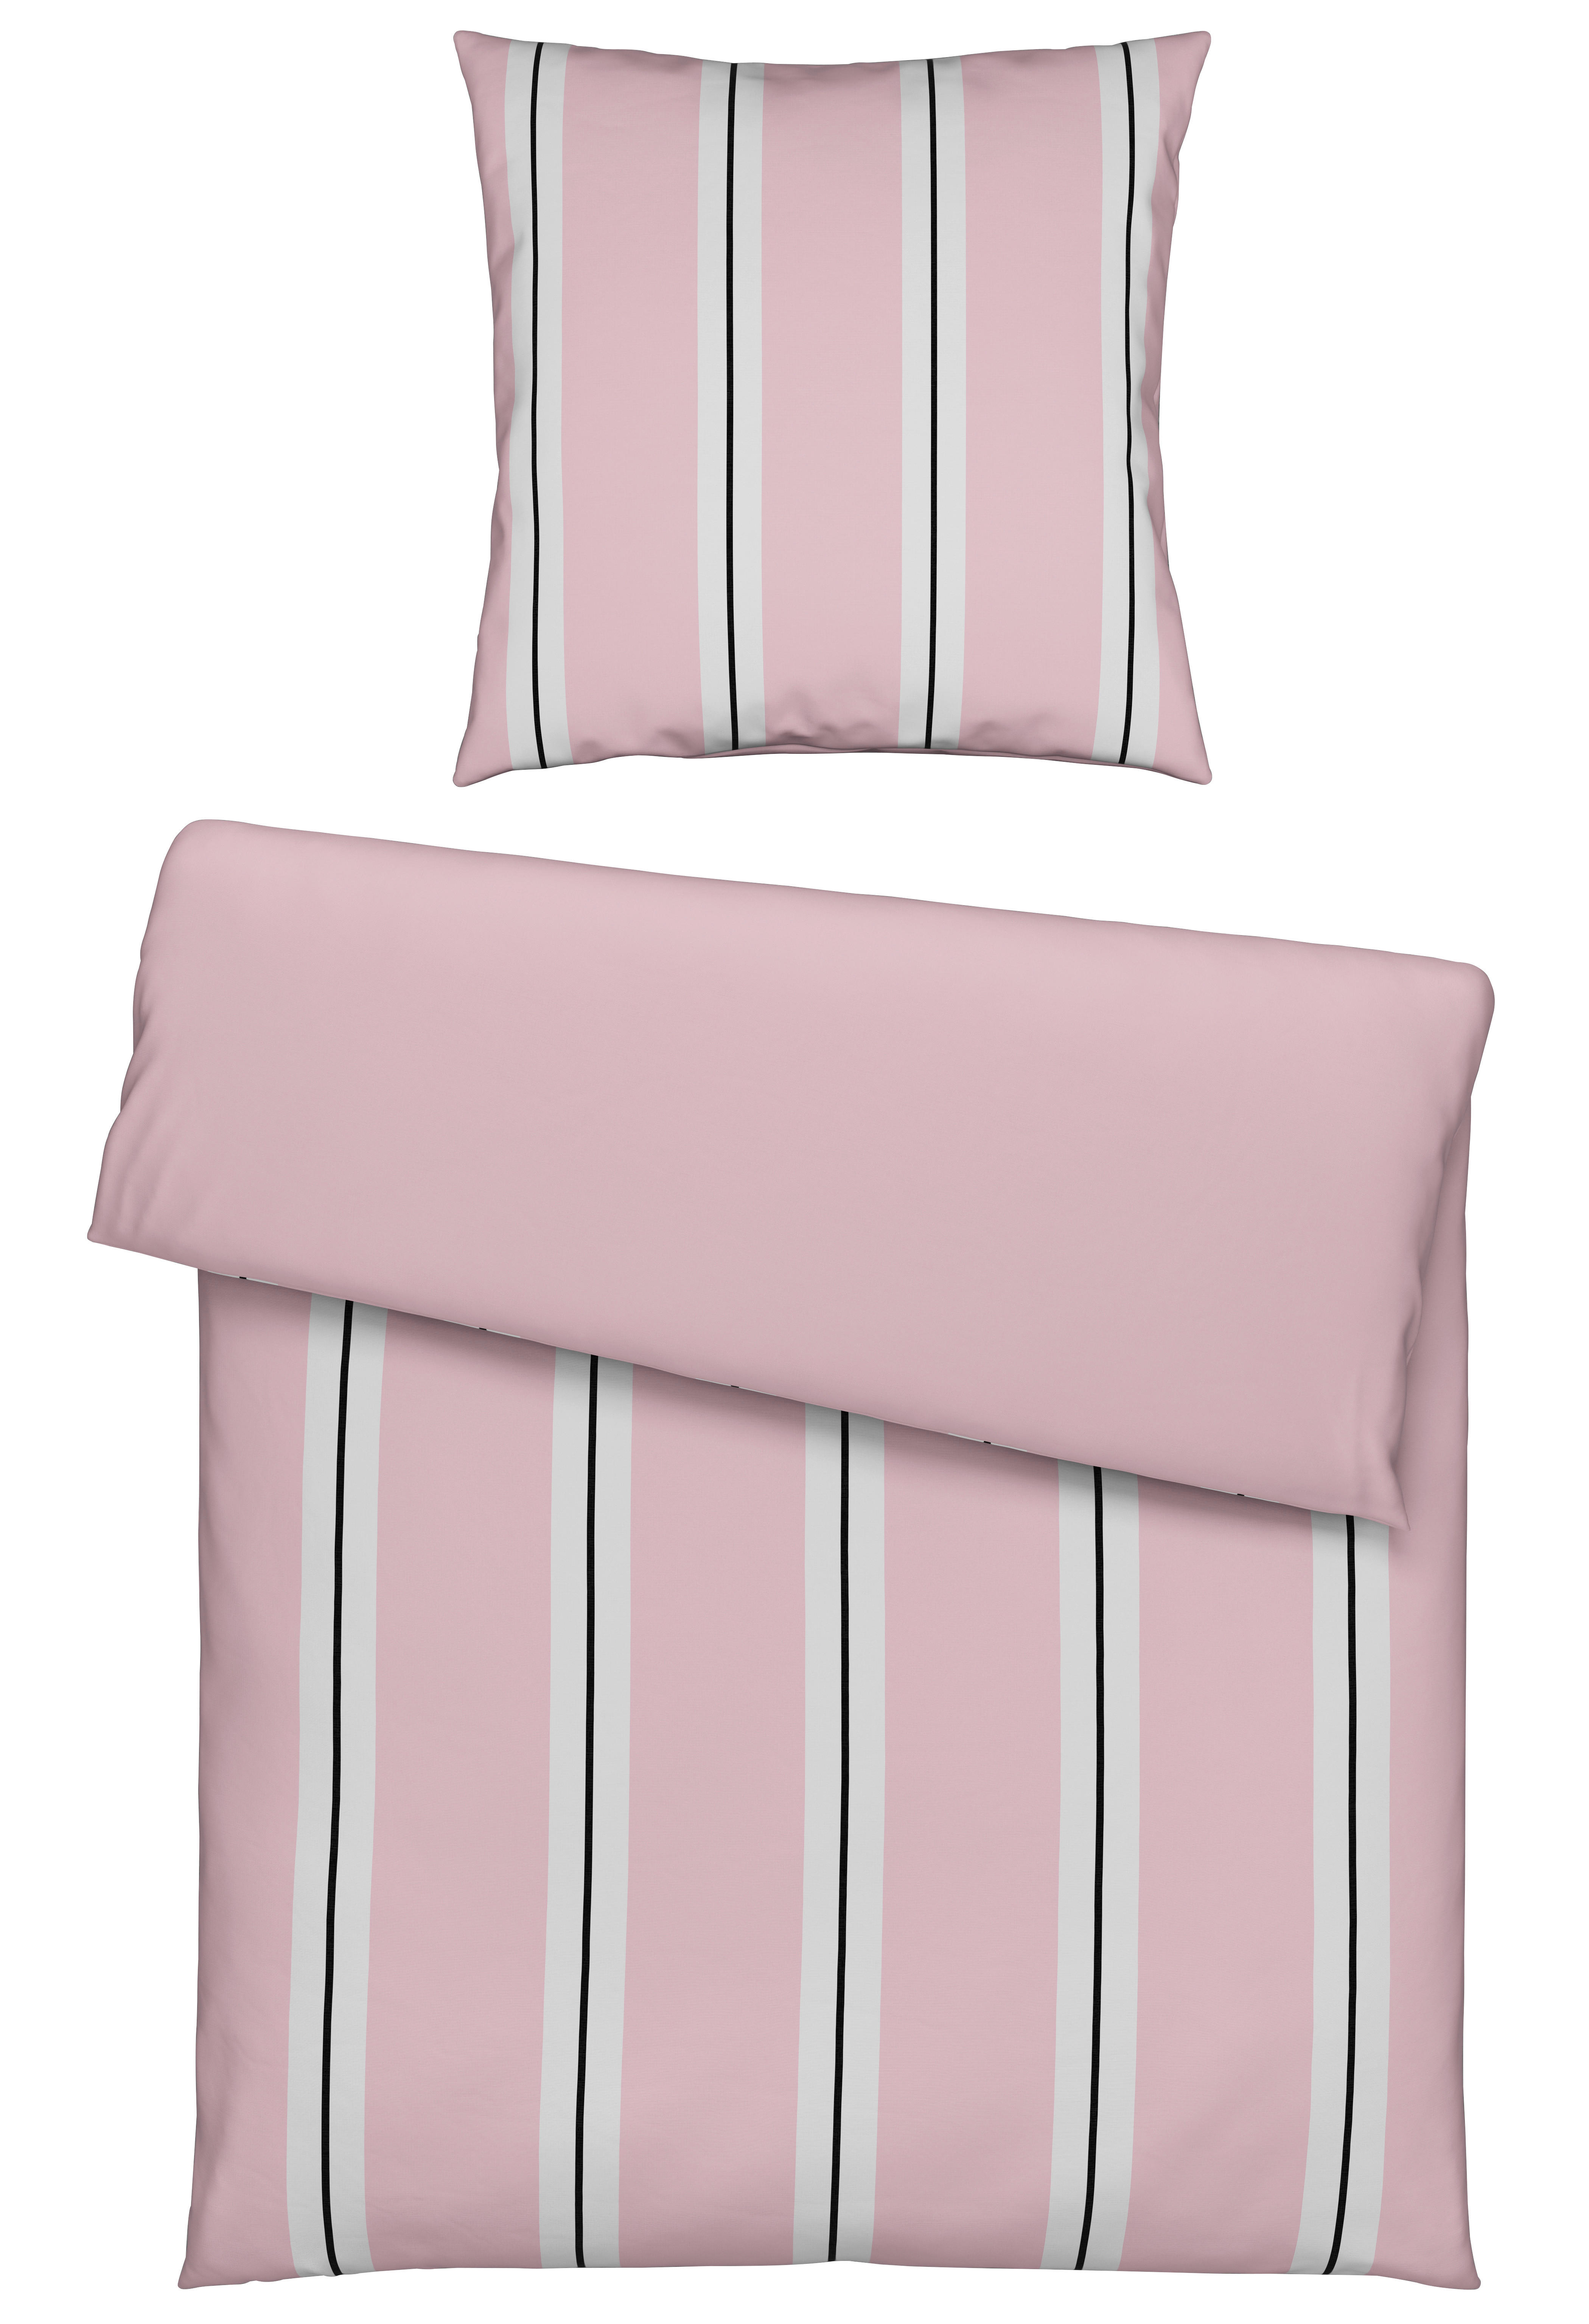 BETTWÄSCHE Stripes Renforcé  - Pink, KONVENTIONELL, Textil (135/200cm) - Novel